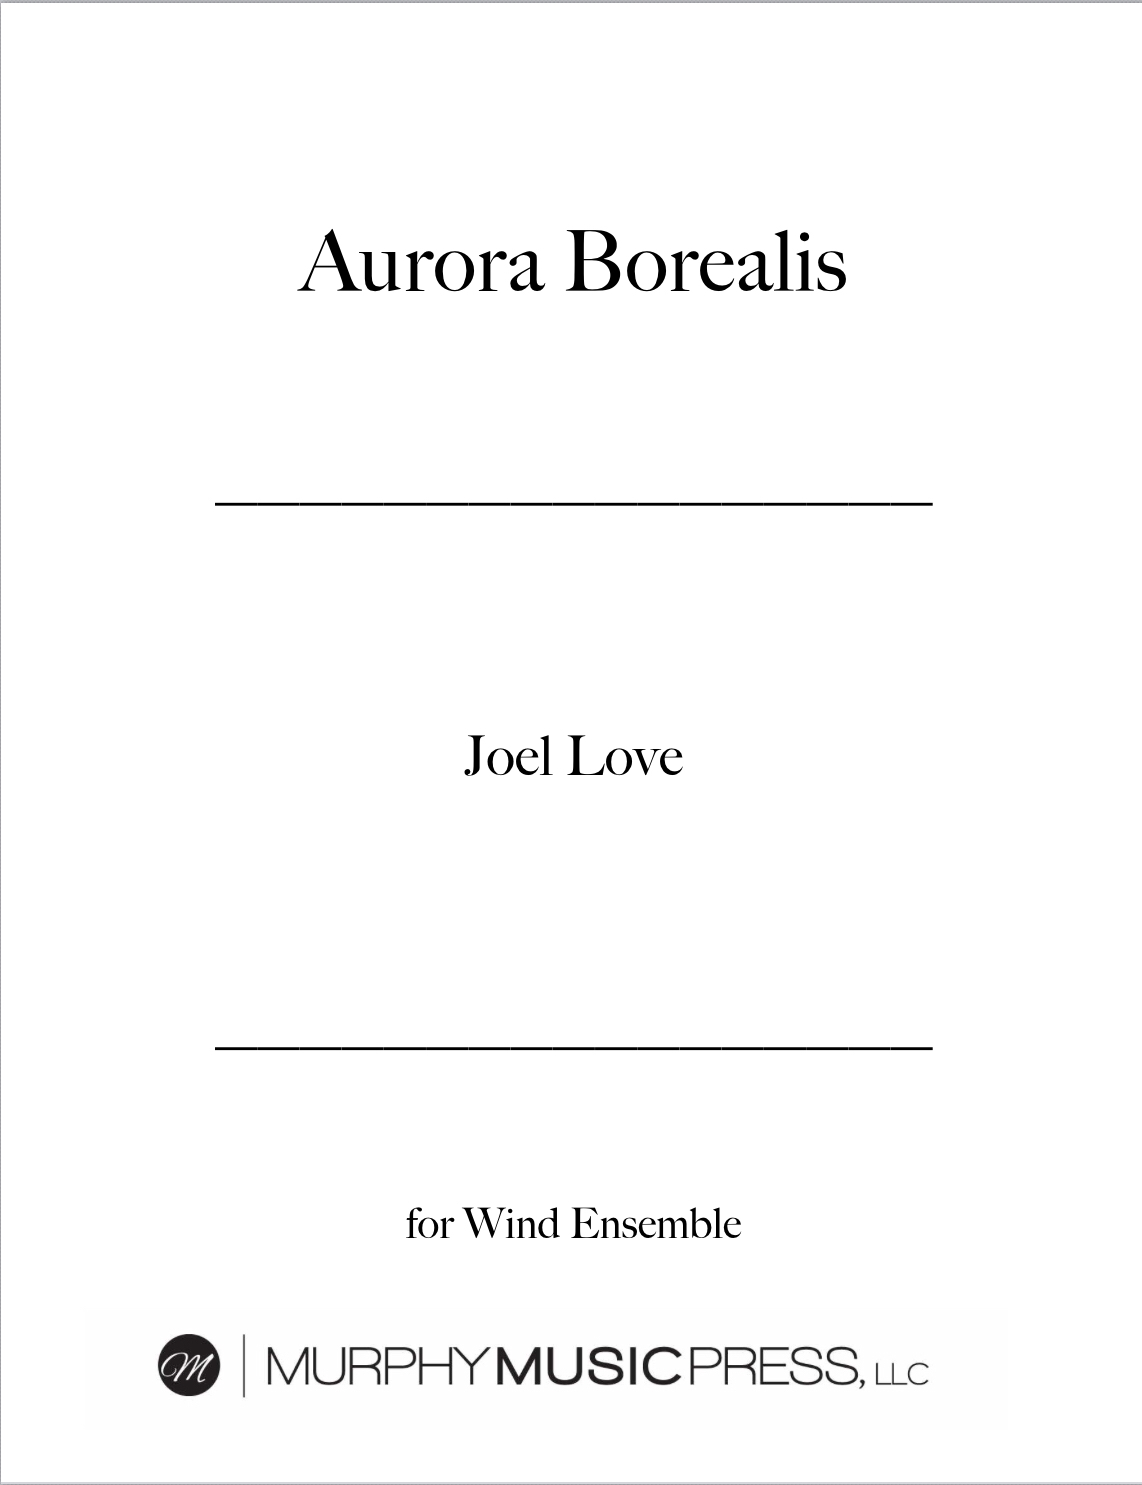 Aurora Borealis by Joel Love